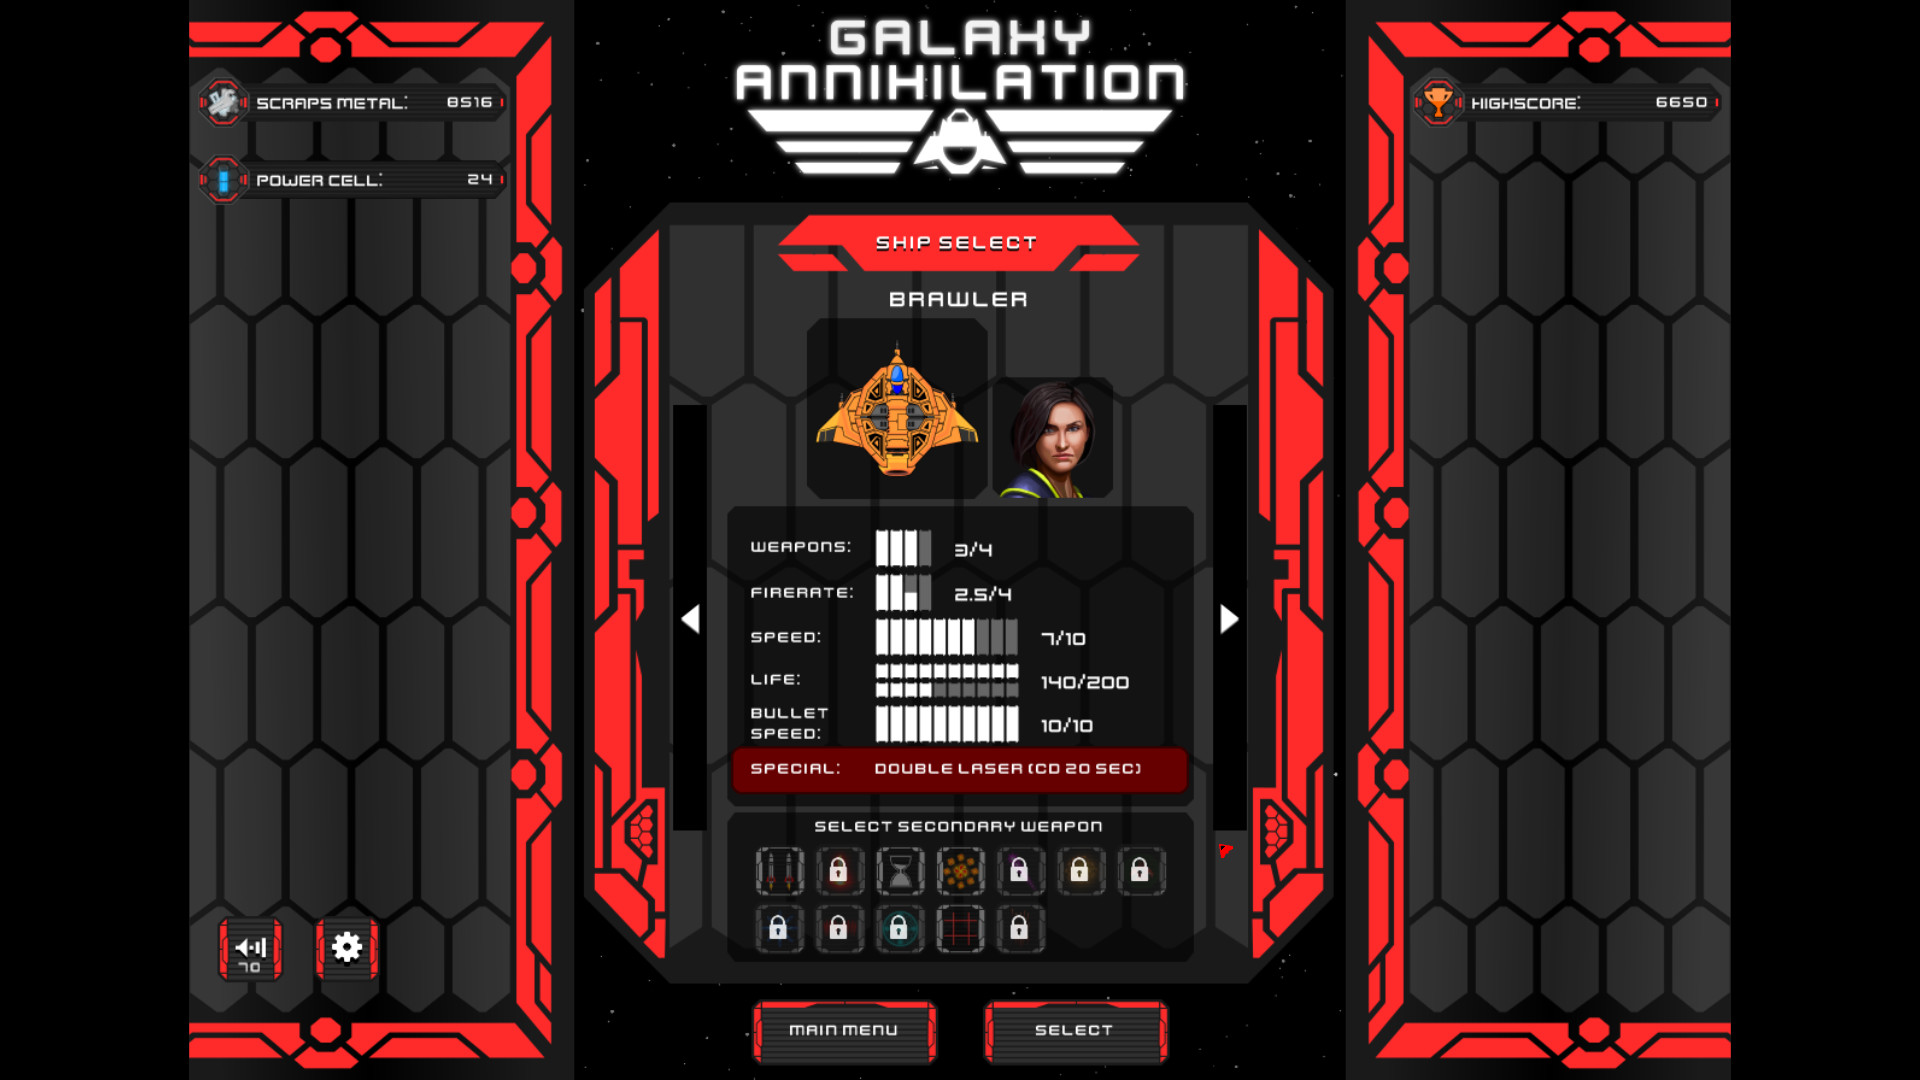 Galaxy Annihilation screenshot